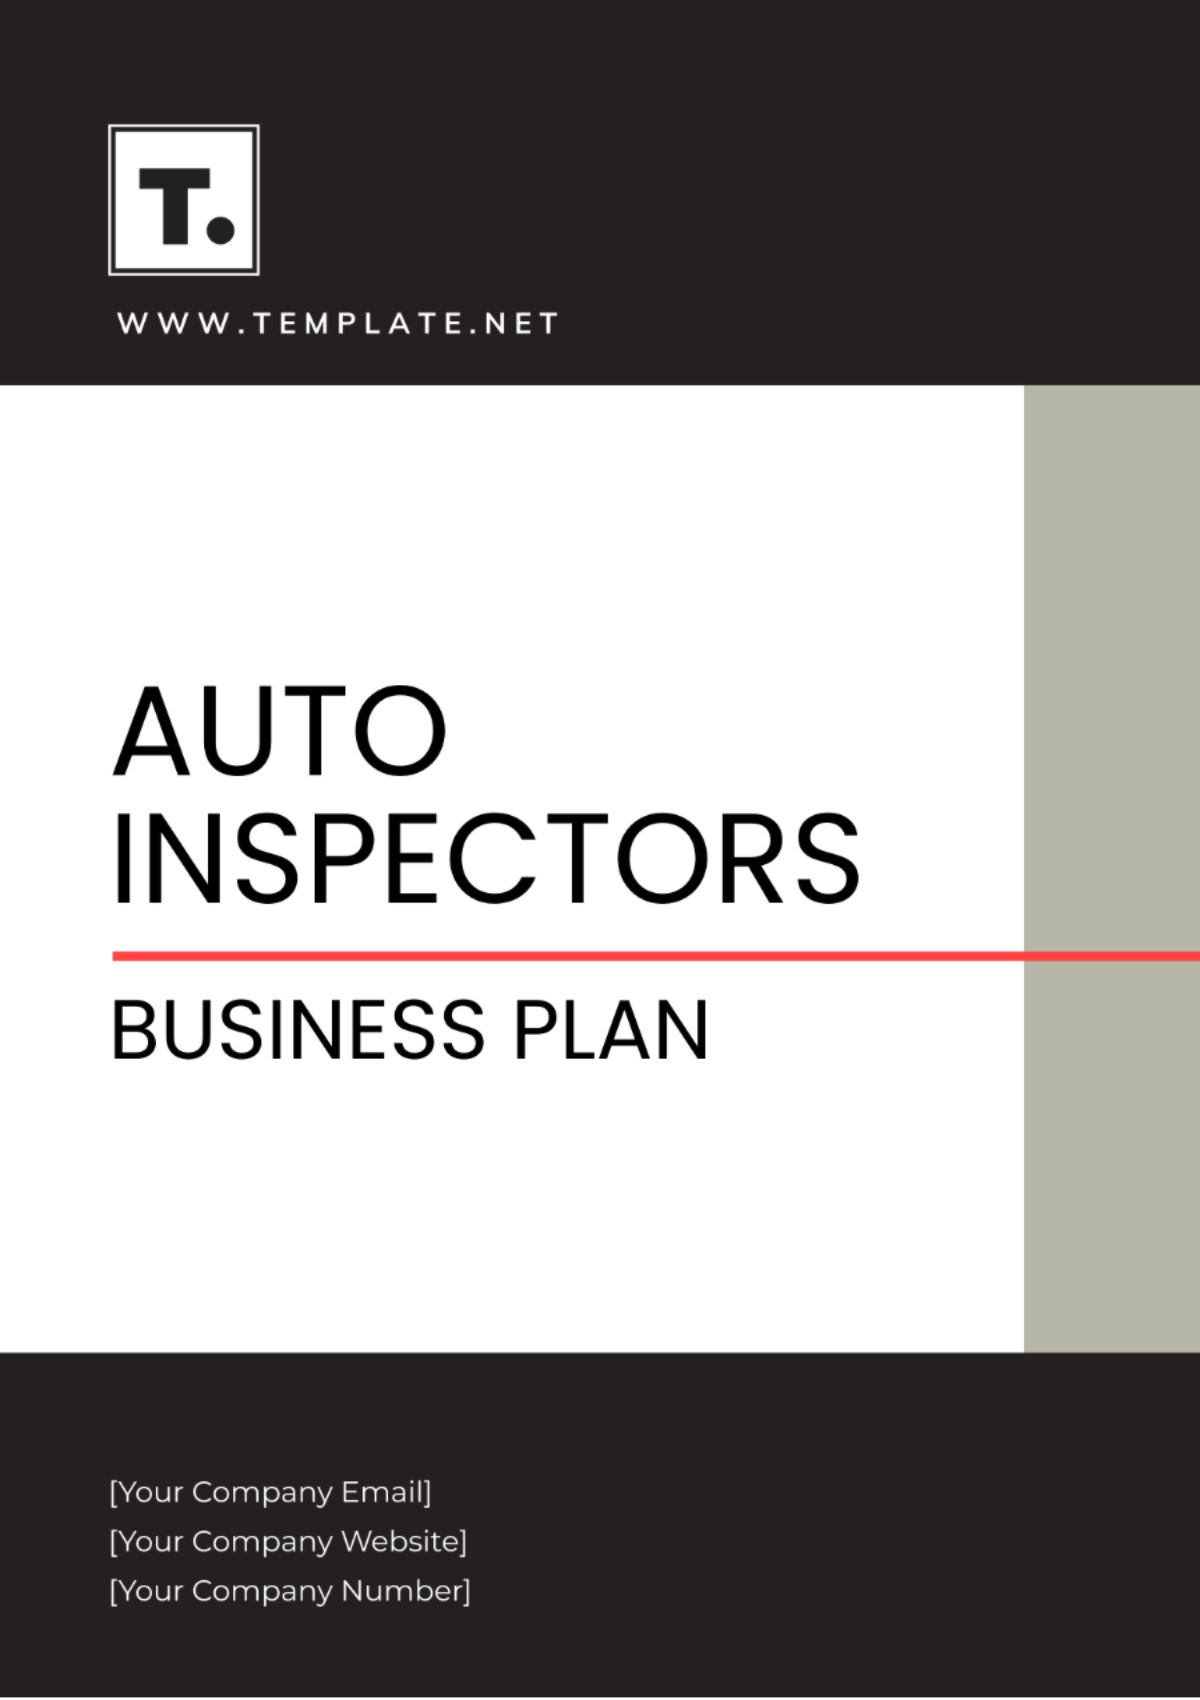 Auto Inspectors Business Plan Template